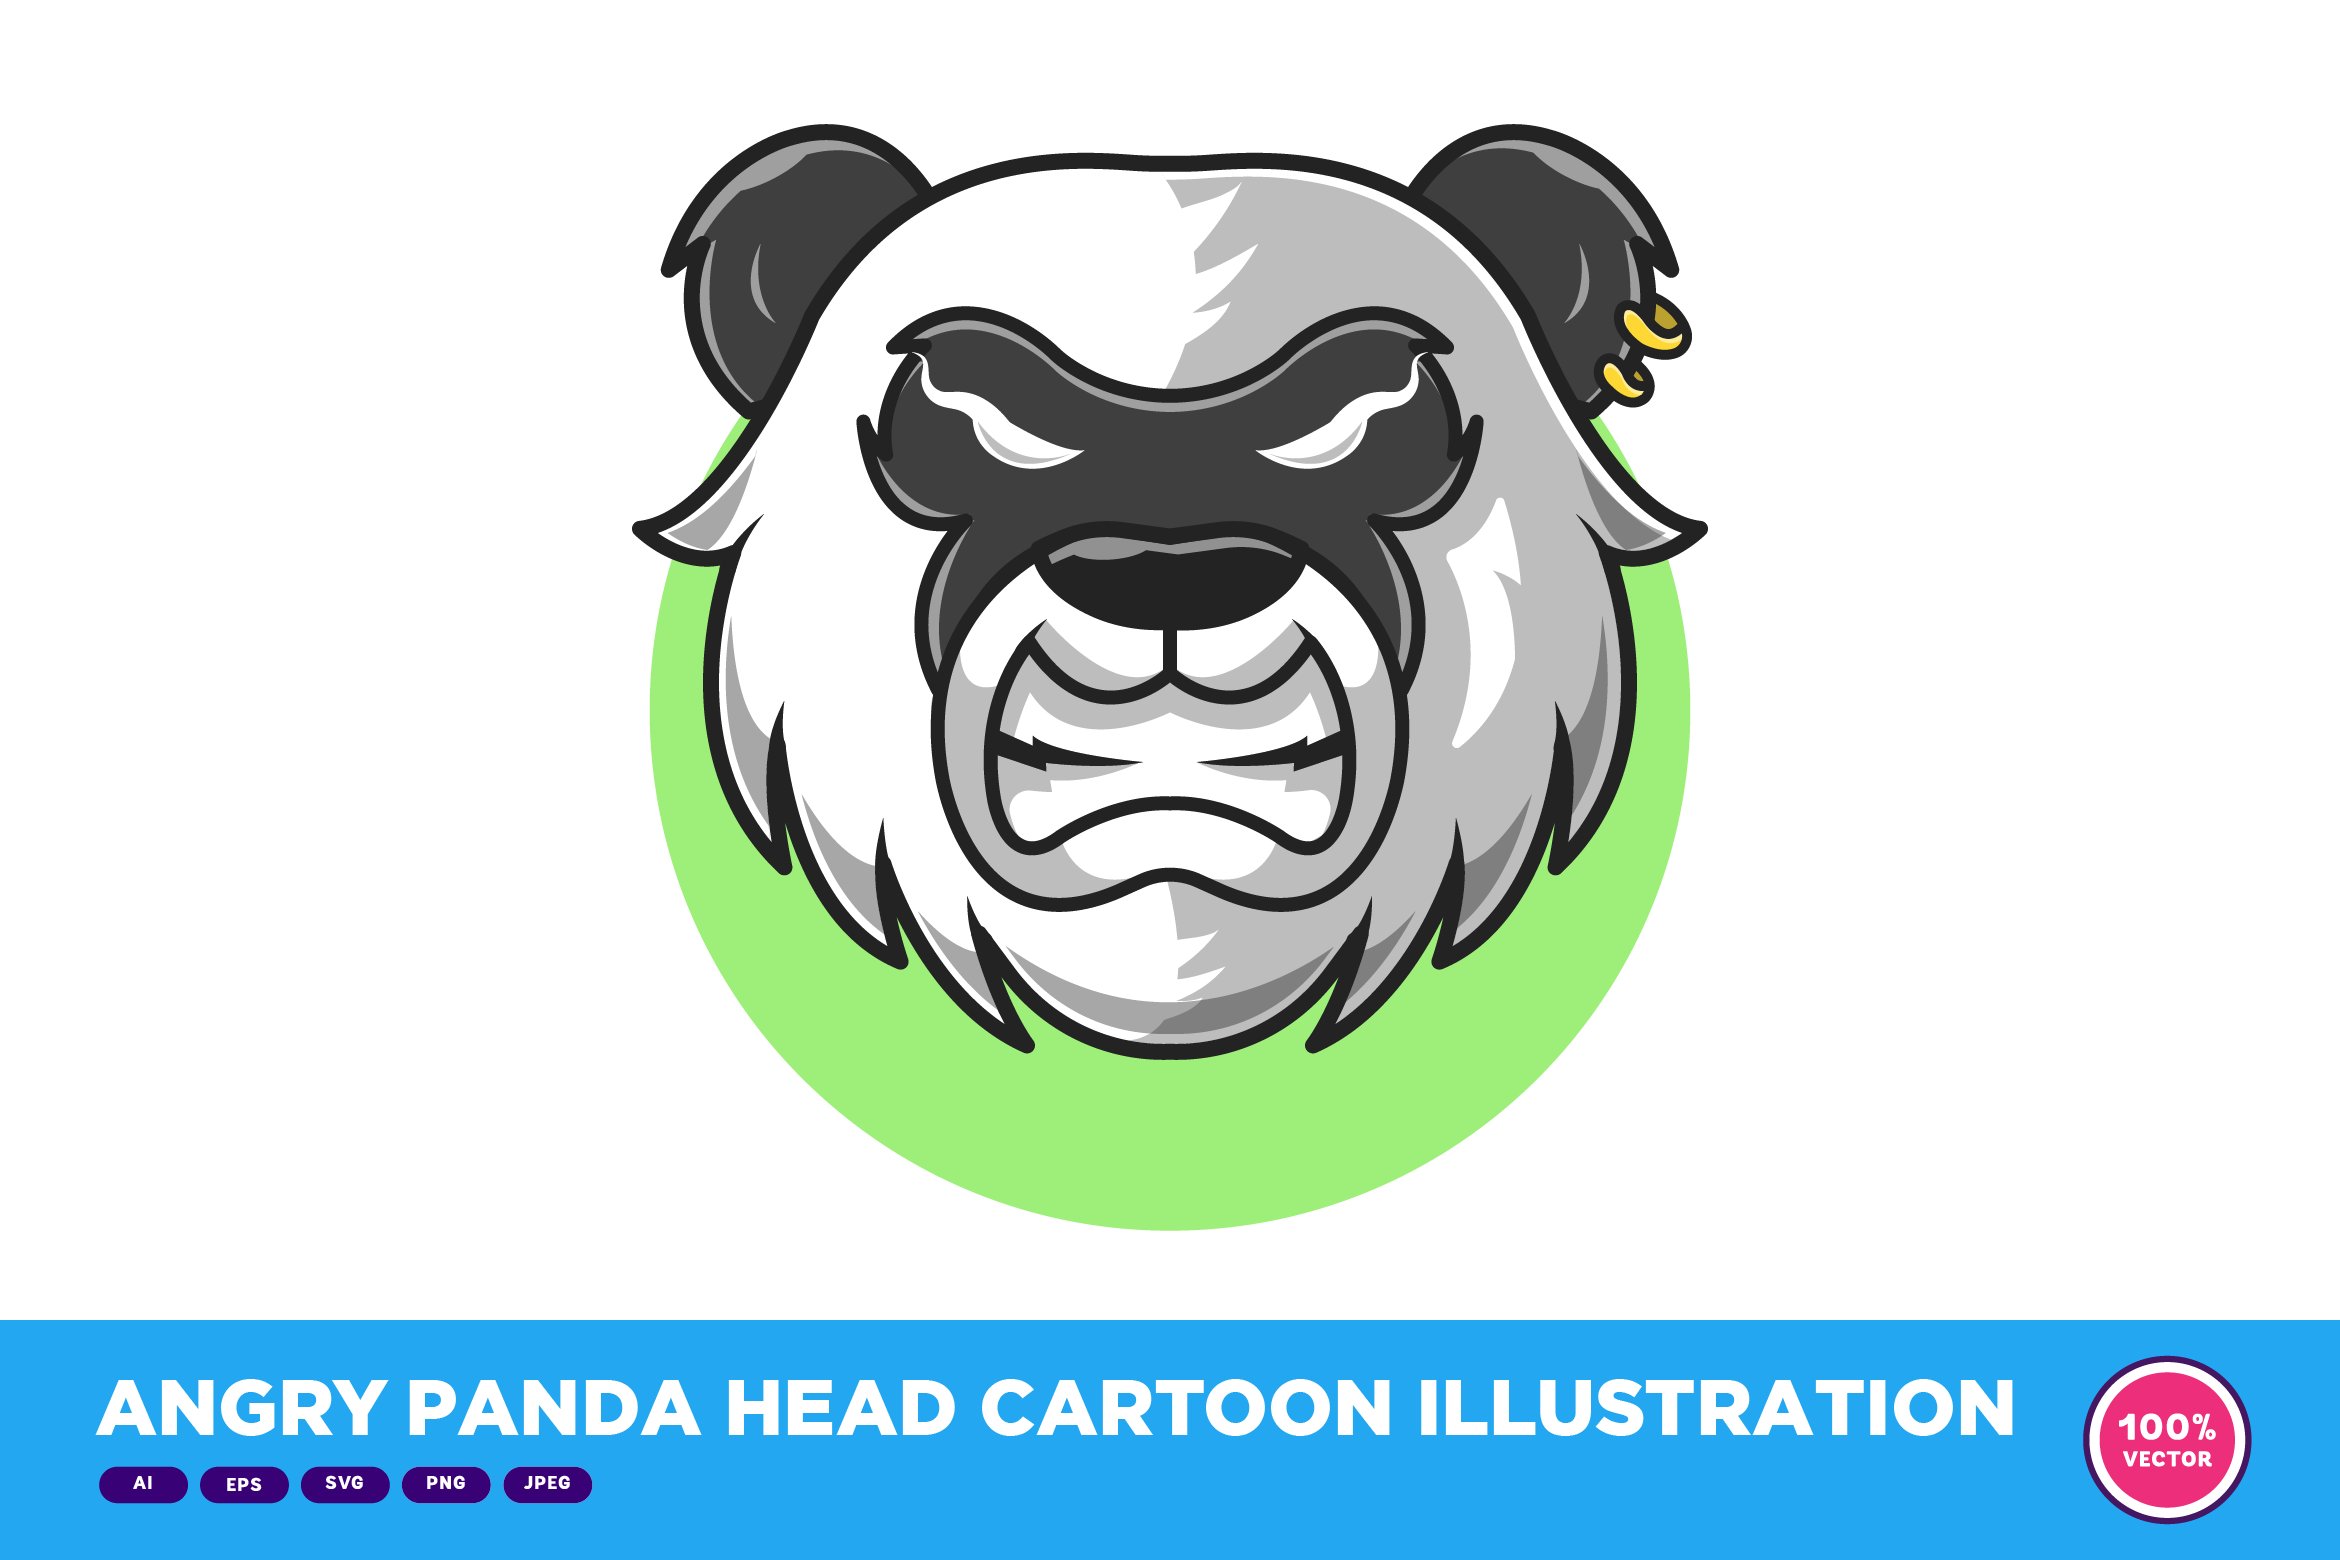 Angry Panda Head Cartoon cover image.